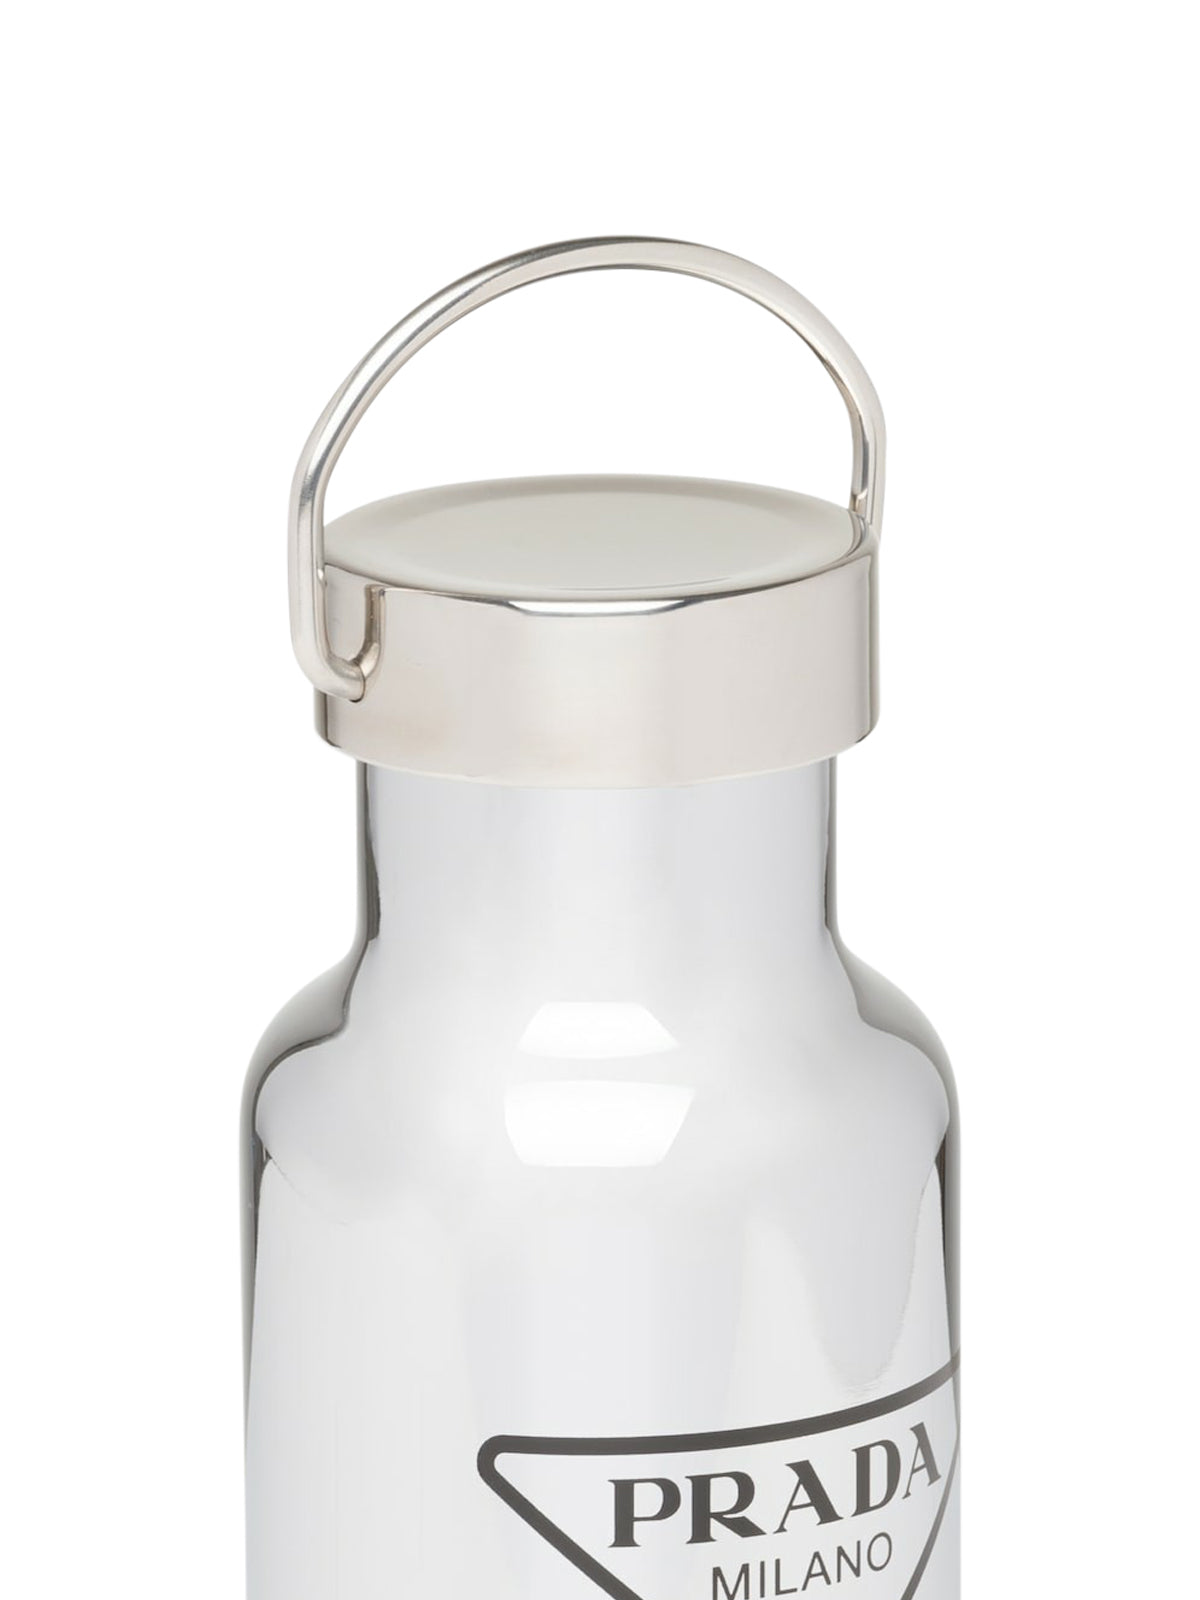 Prada, Bags, Prada Stainless Steel Water Bottle 50 Ml With Bottle Holder